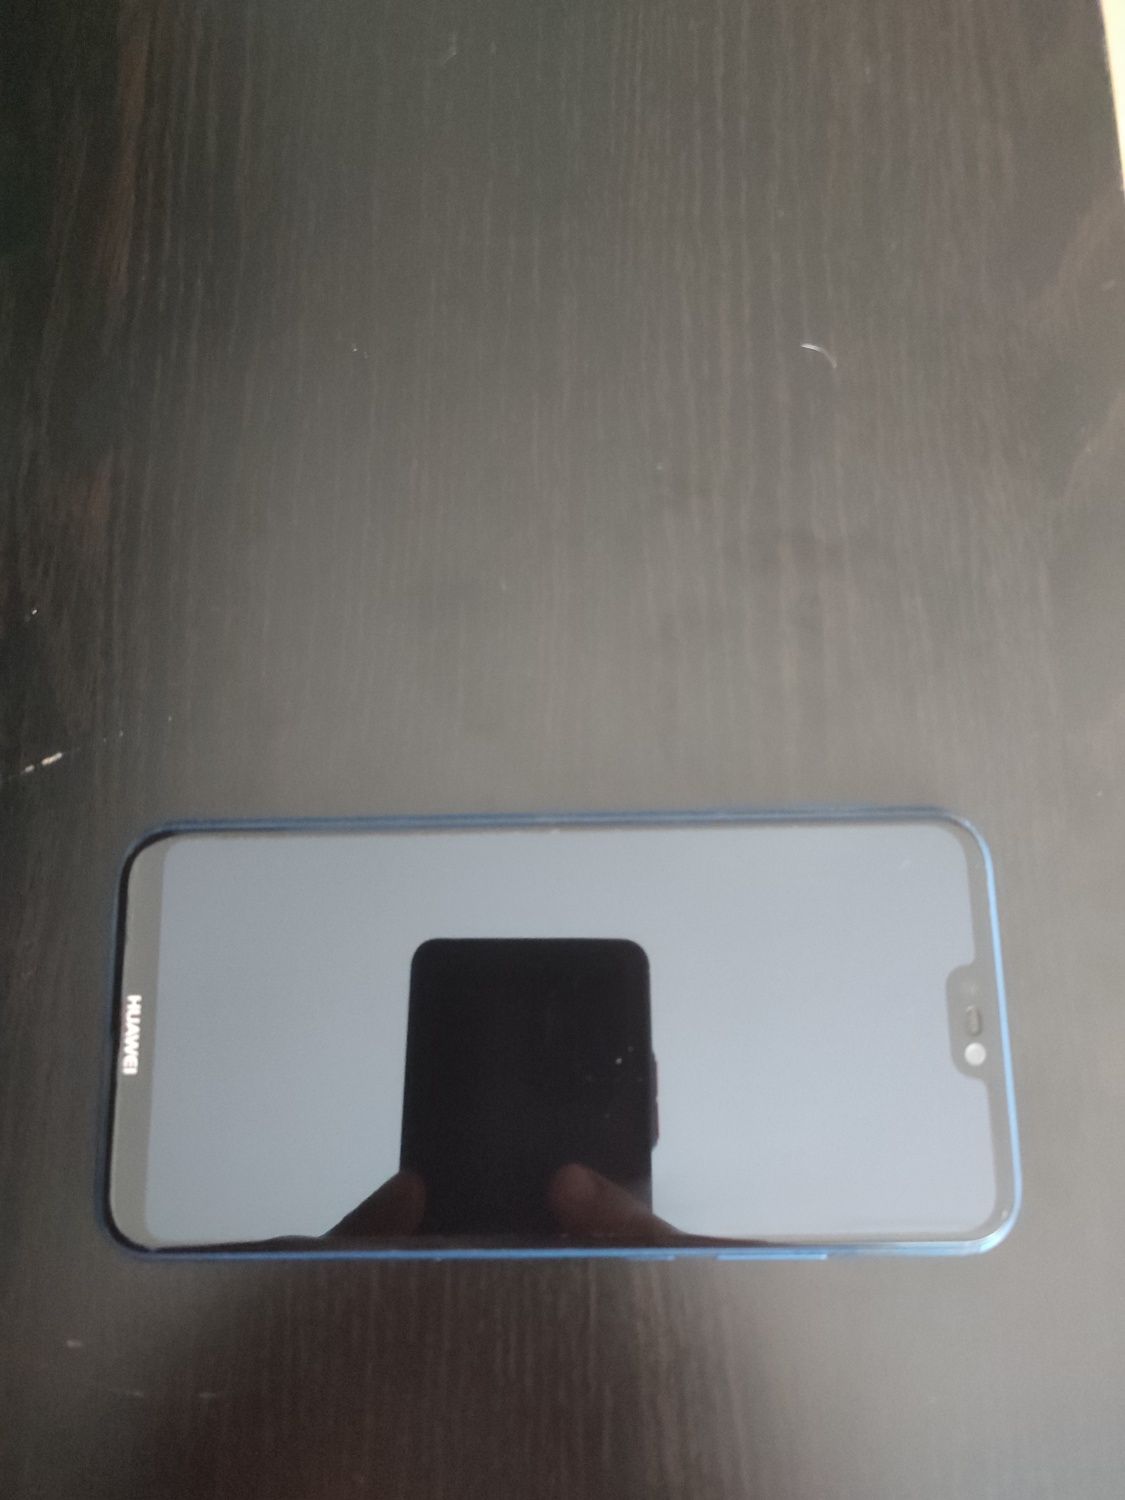 Huawei P20 lite blue